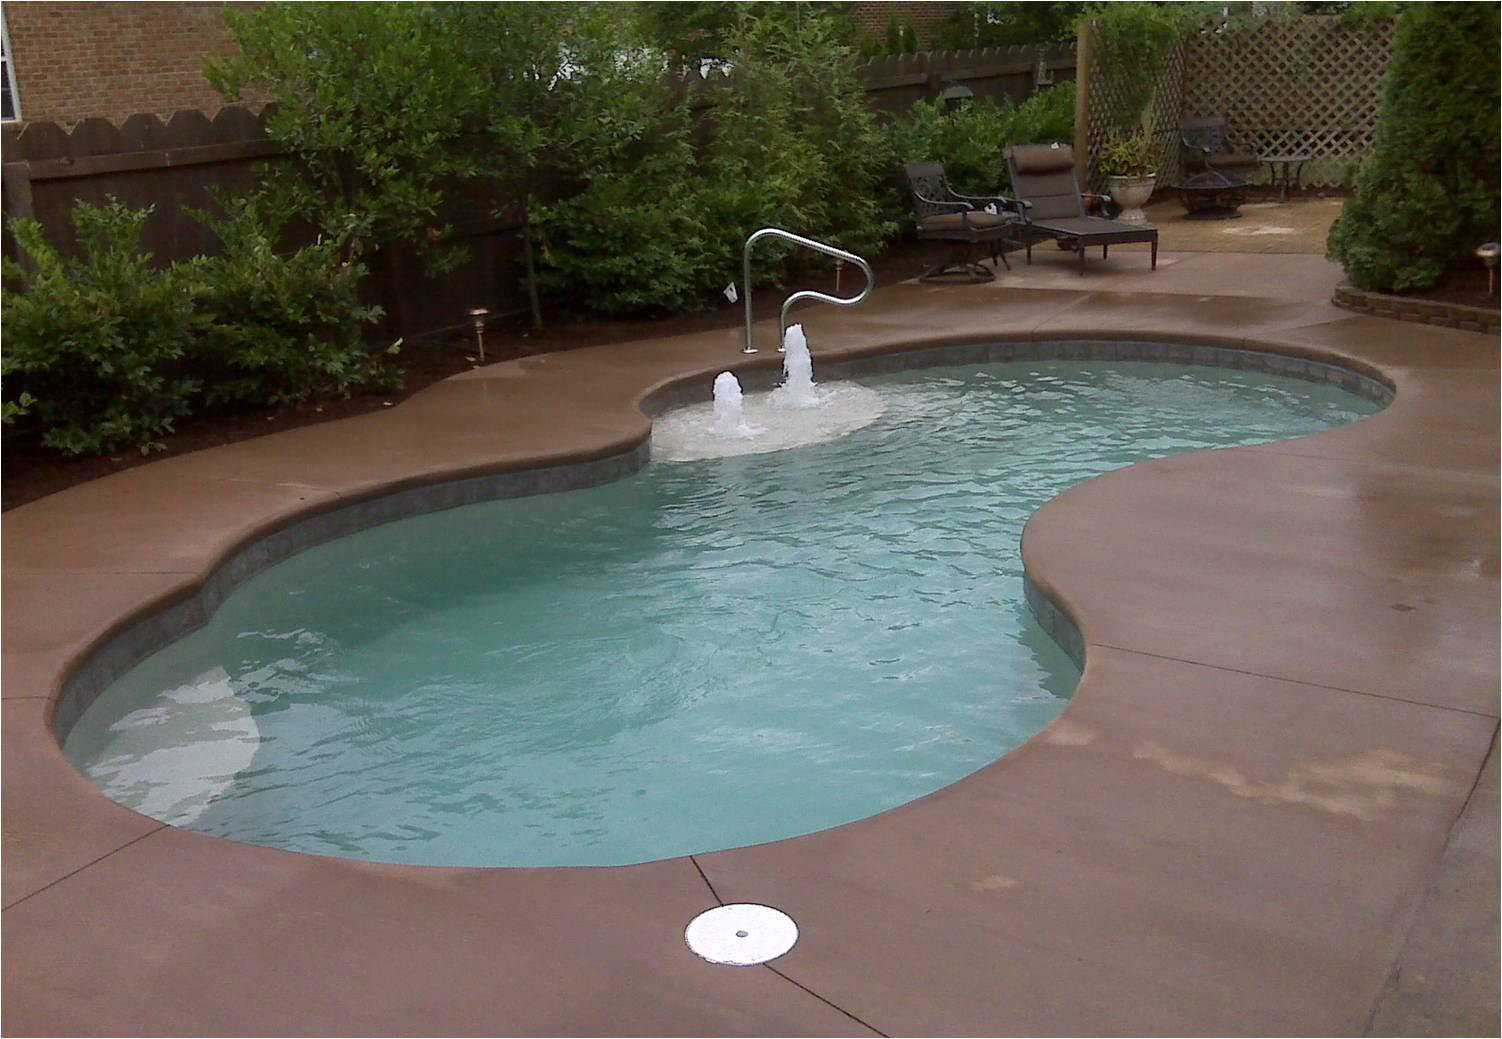 Best ideas about Fiberglass Inground Pool
. Save or Pin Small Fiberglass Inground Pool Now.